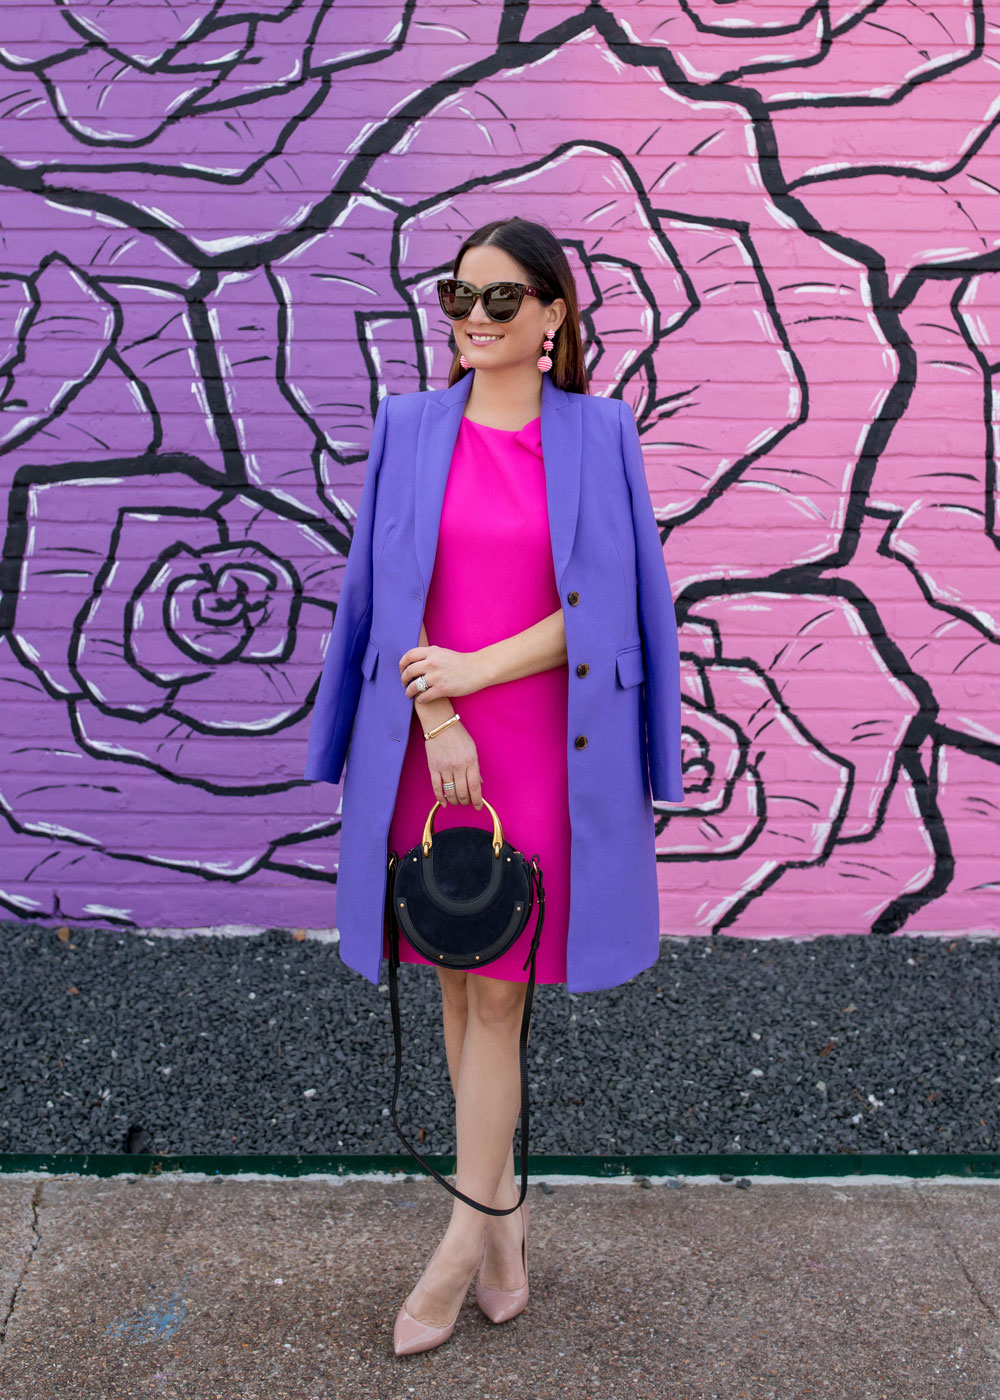 Pink Ruffle Sleeve Shift Dress and Purple Coat in Houston, Texas